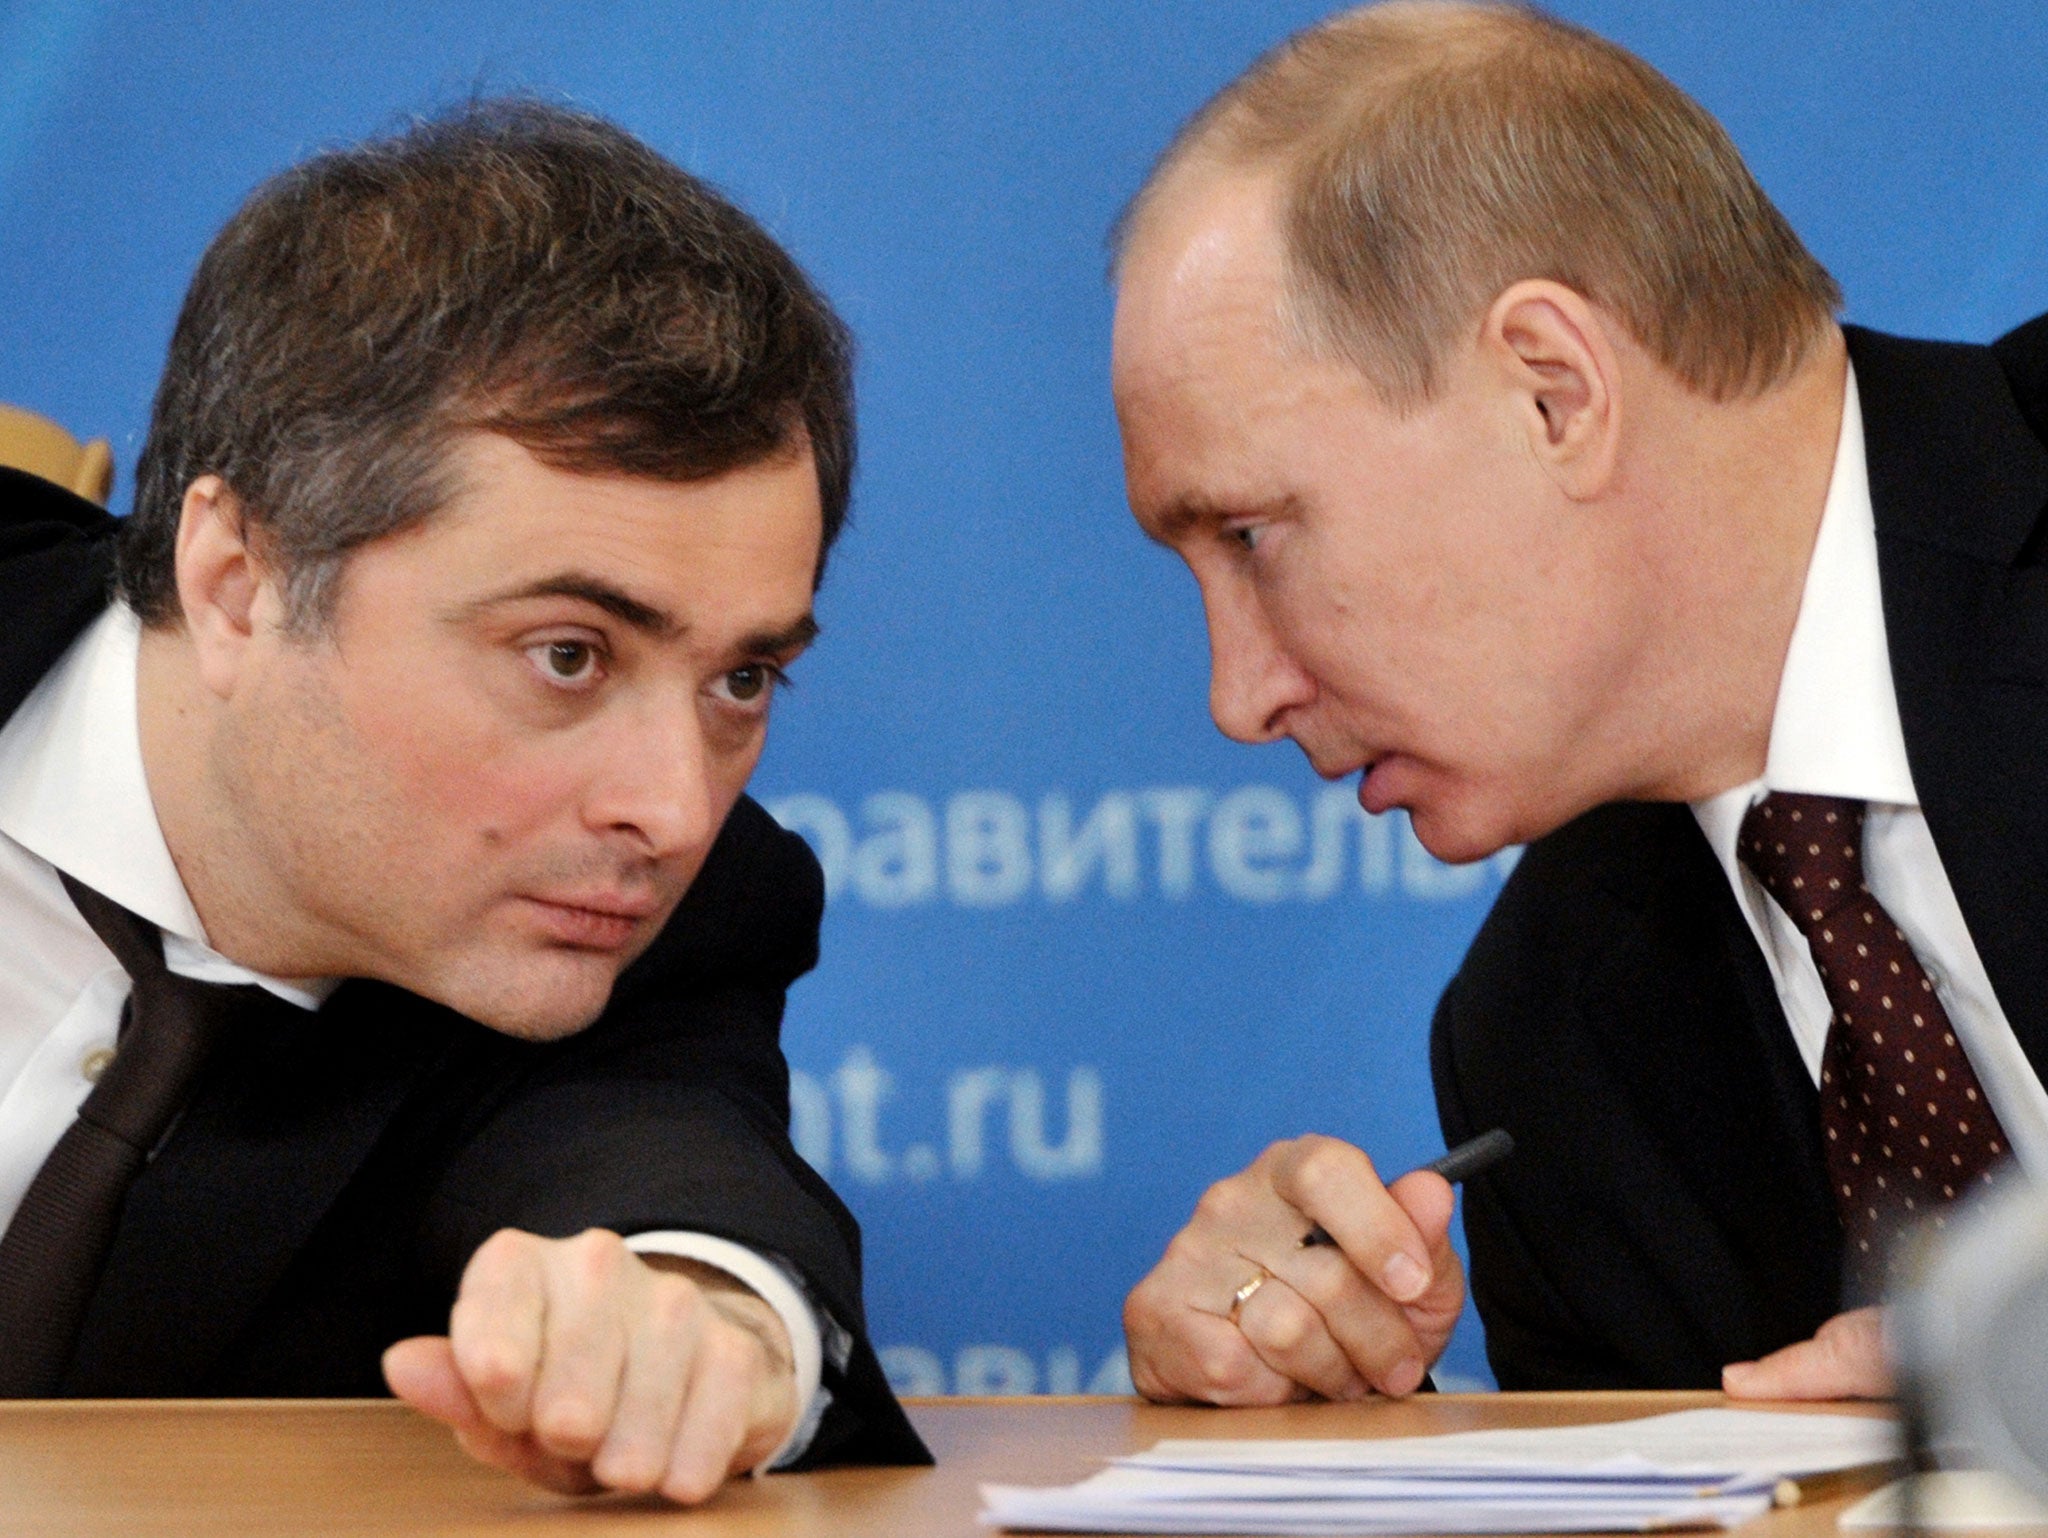  Vladislav Surkov pictured next to President Vladimir Putin 